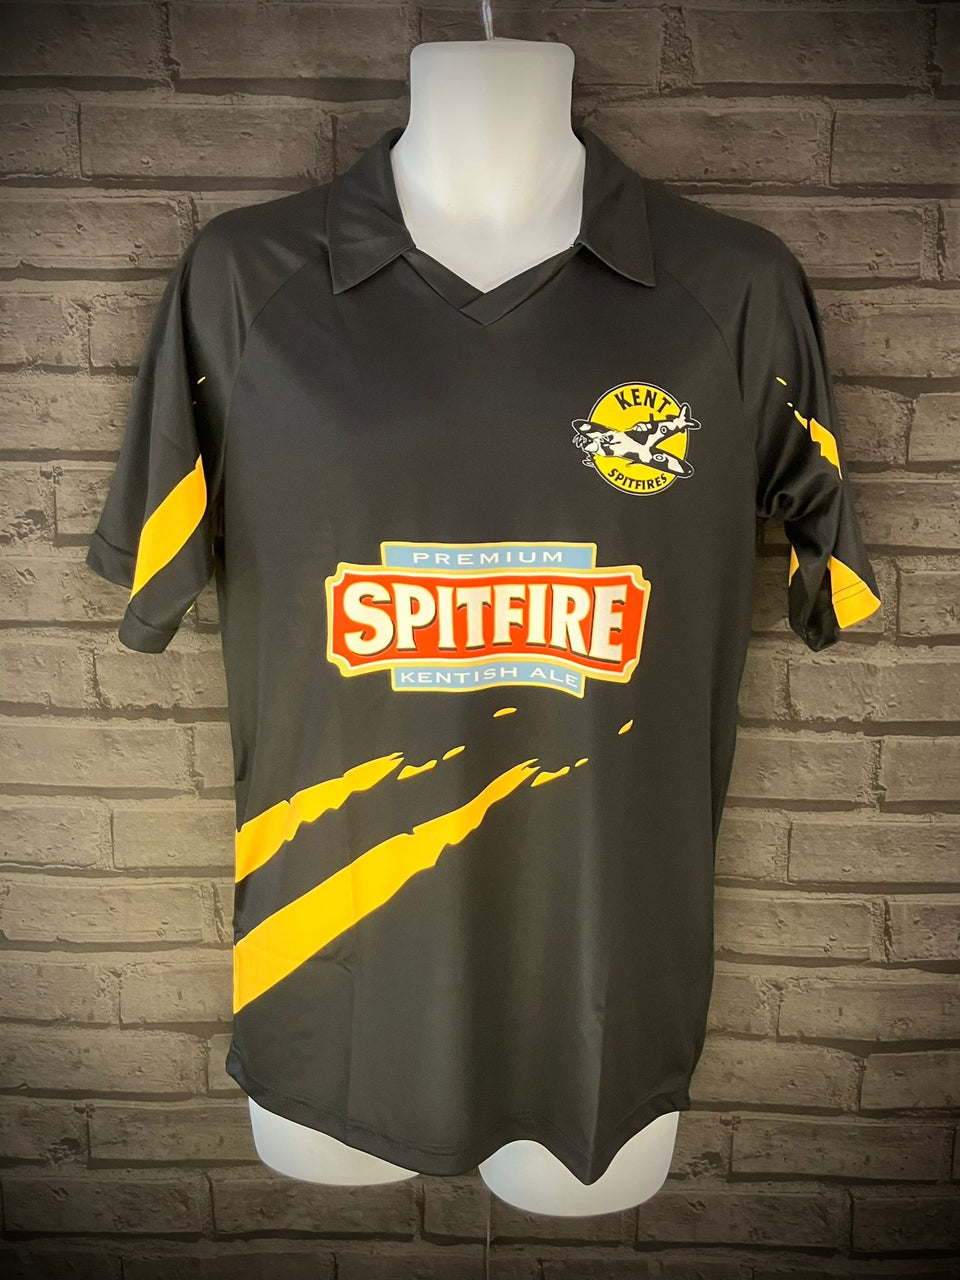 Spitfire Retro Cricket Shirt Black/Gold